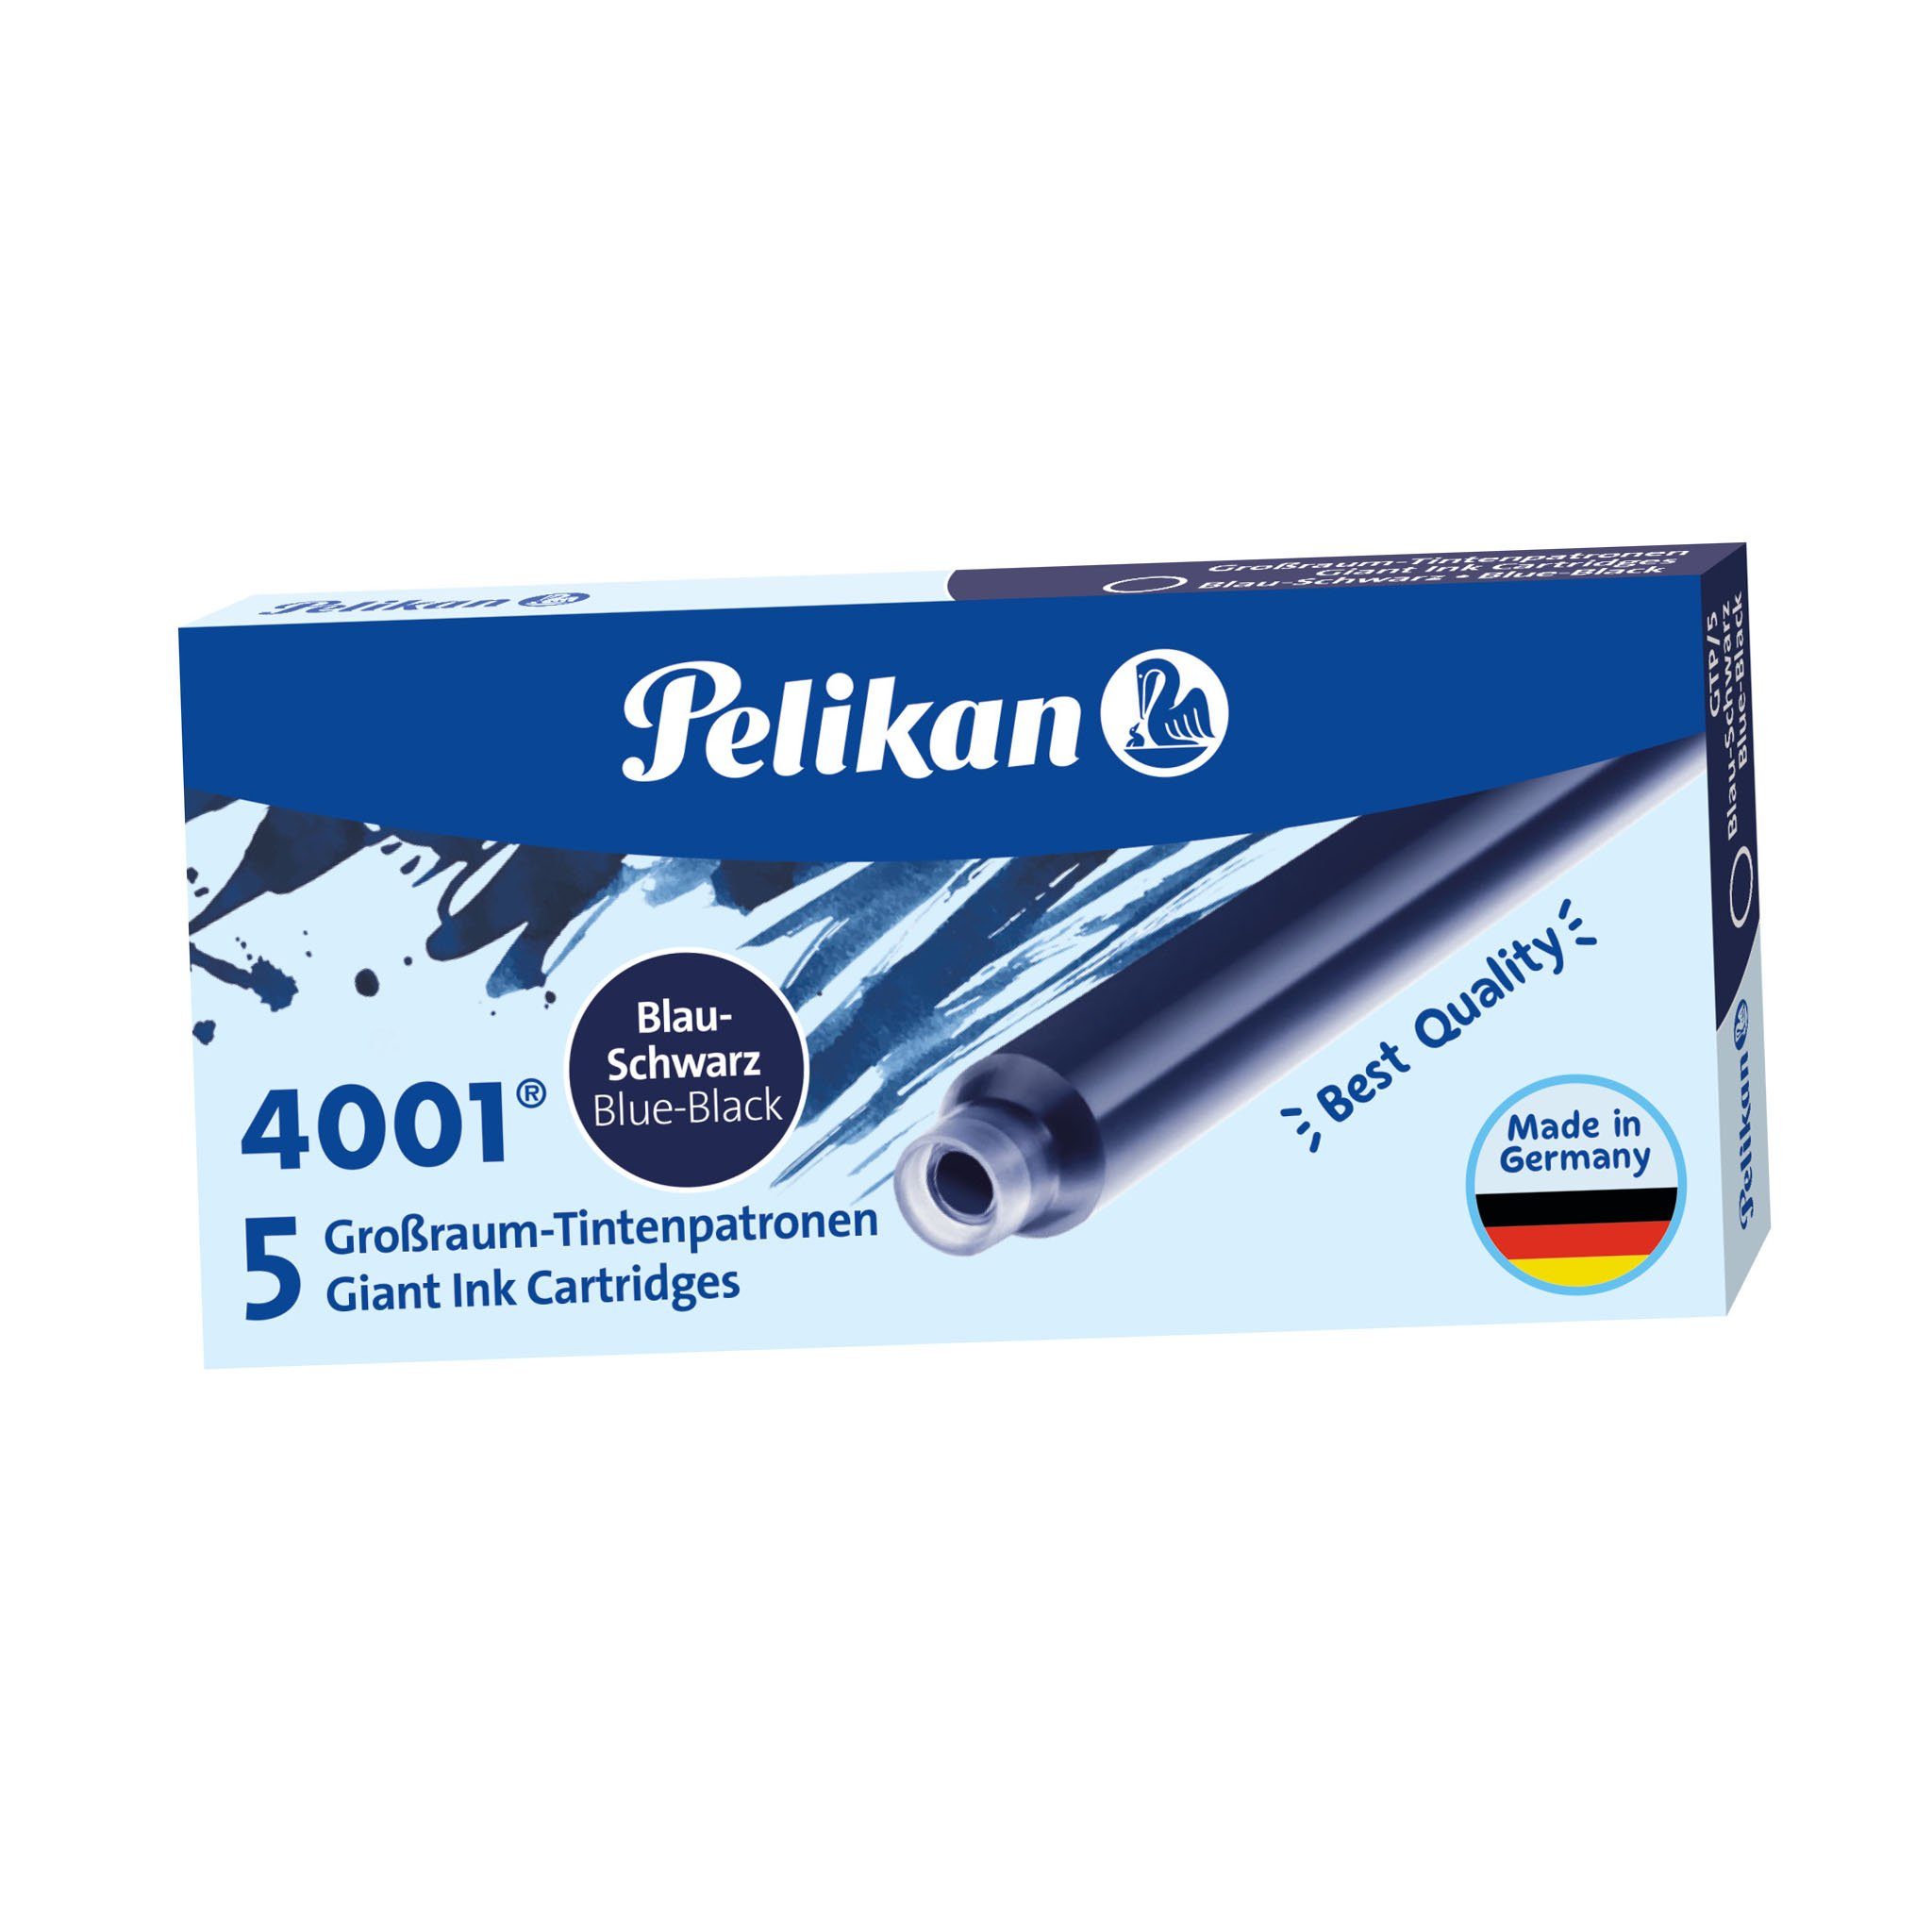 Pelikan Großraum-Tintenpatronen 4001 Pelikan GTP/5, Füllfederhalter blau-schwarz